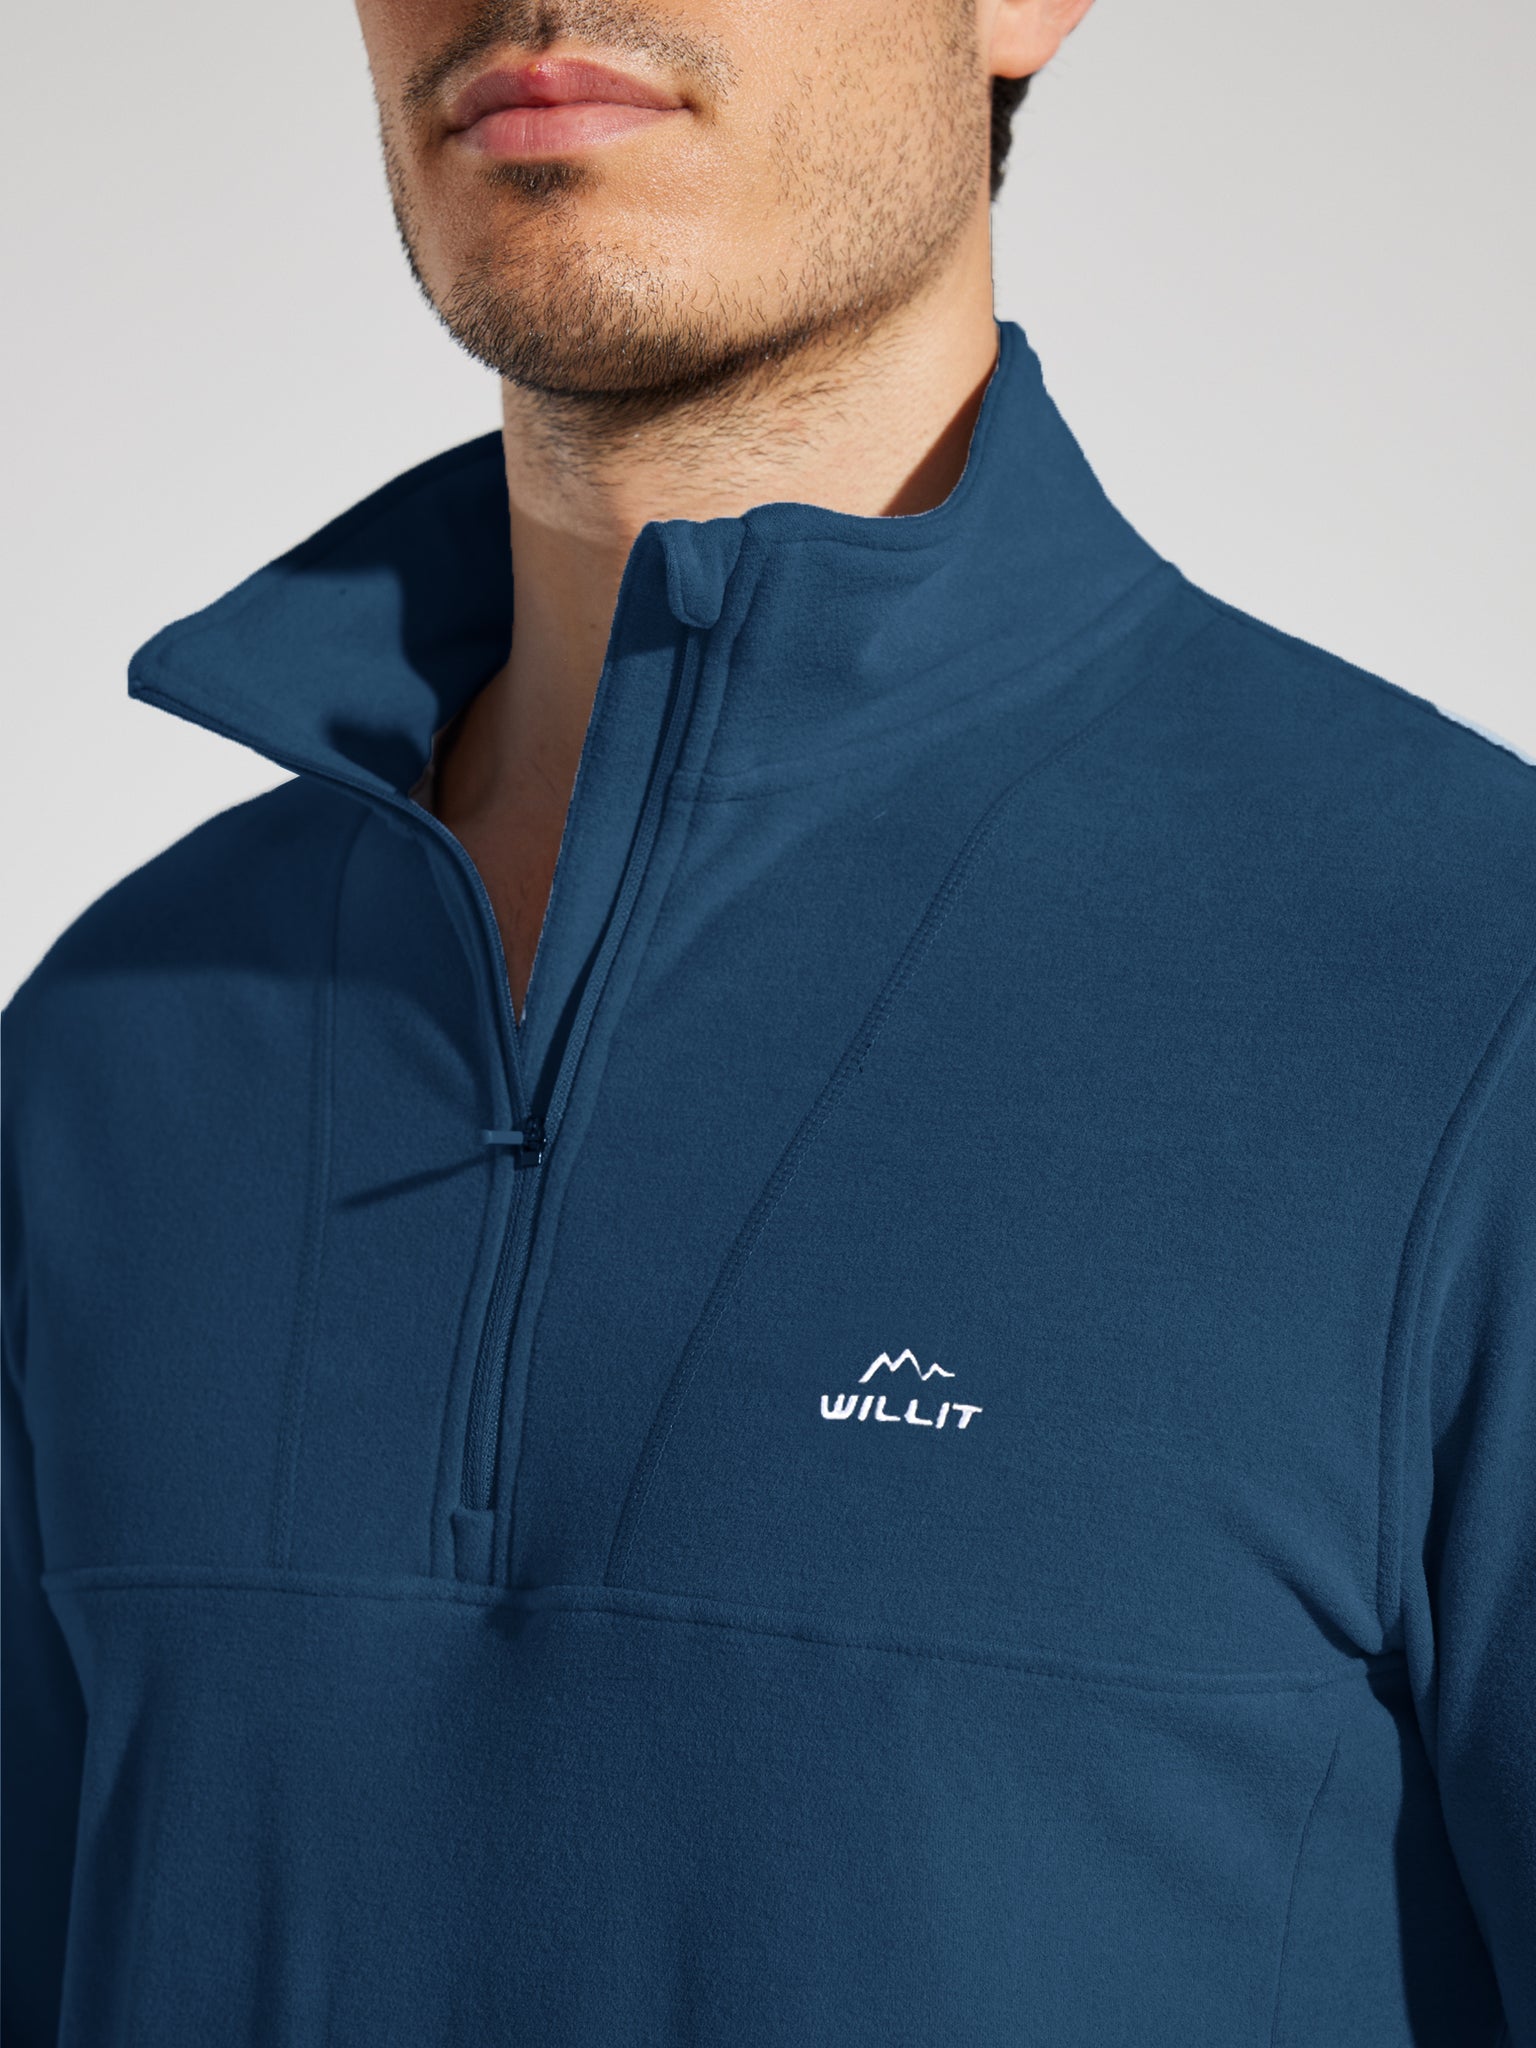 Men's Fleece Quarter Zip Pullover_OceanBlue_model3